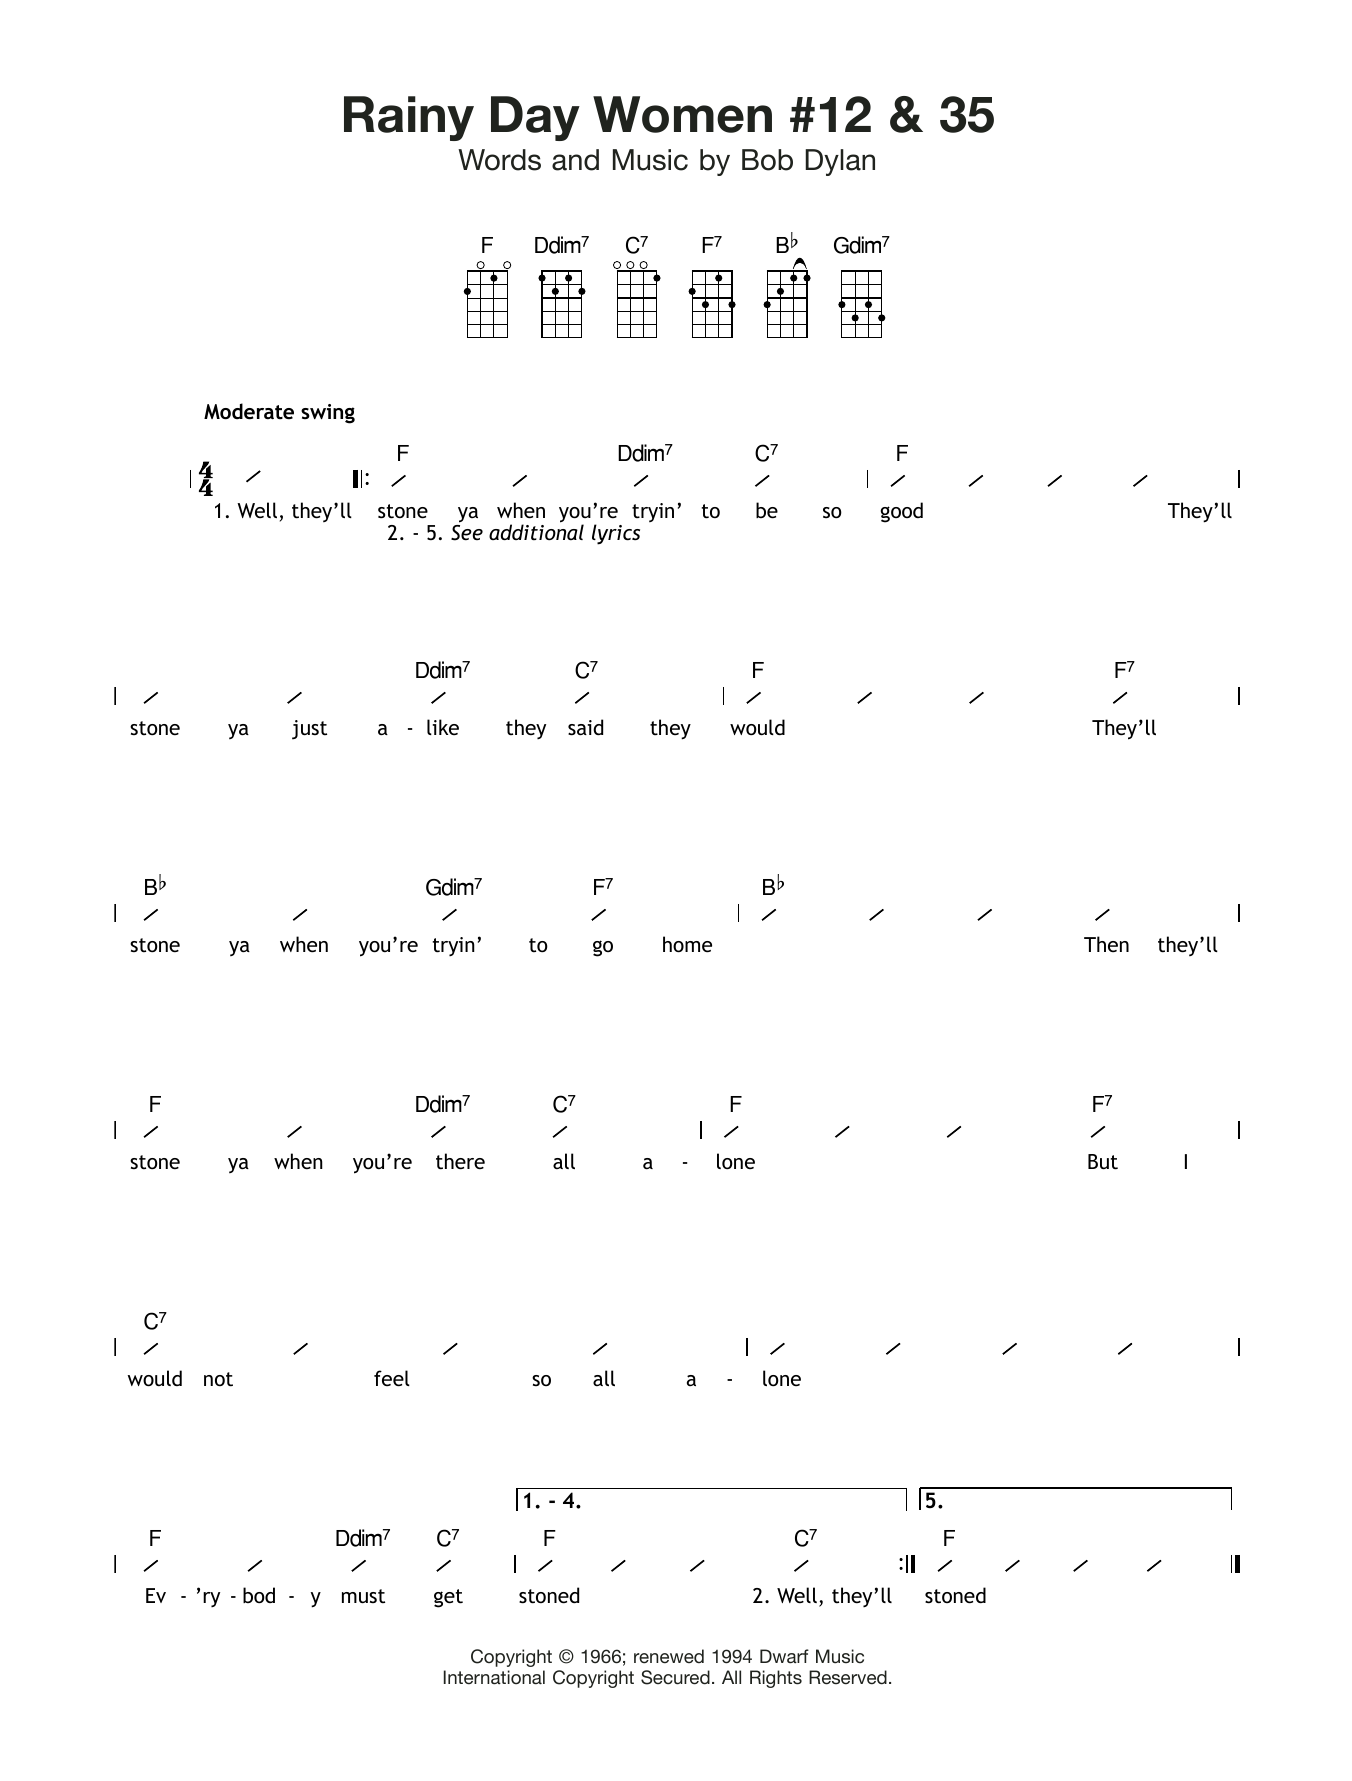 Bob Dylan Rainy Day Women #12 and 35 Sheet Music Notes & Chords for Guitar Chords/Lyrics - Download or Print PDF